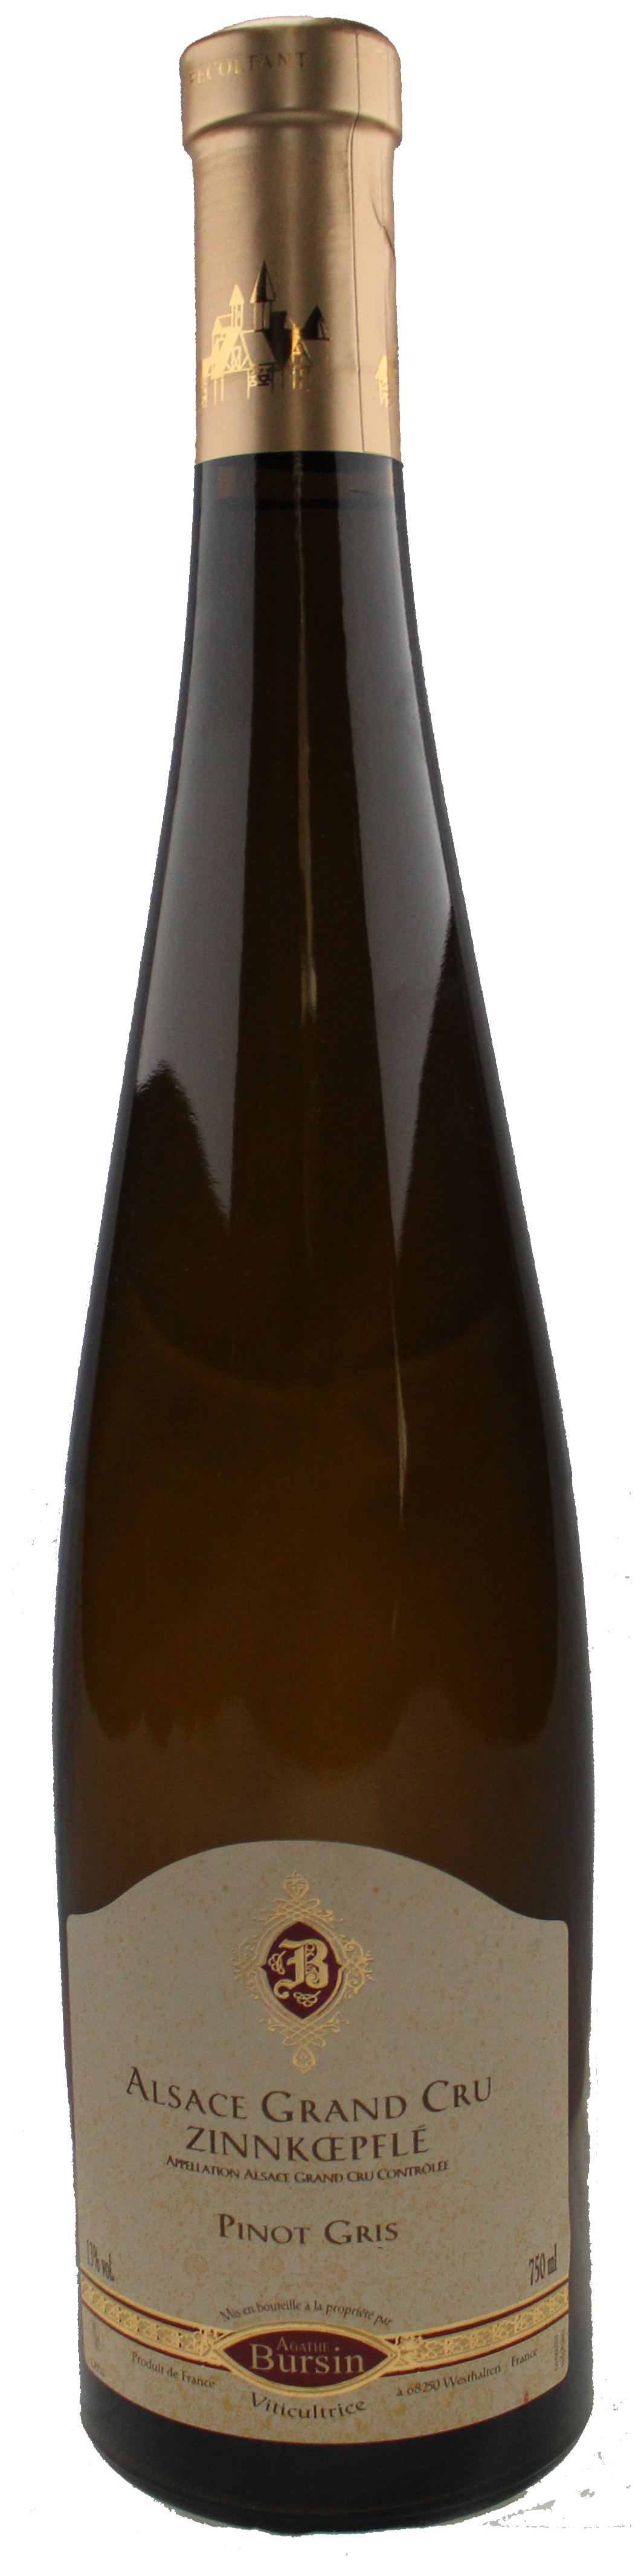 Bottle shot of 2013 Pinot Gris Grand Cru Zinnkoepfle